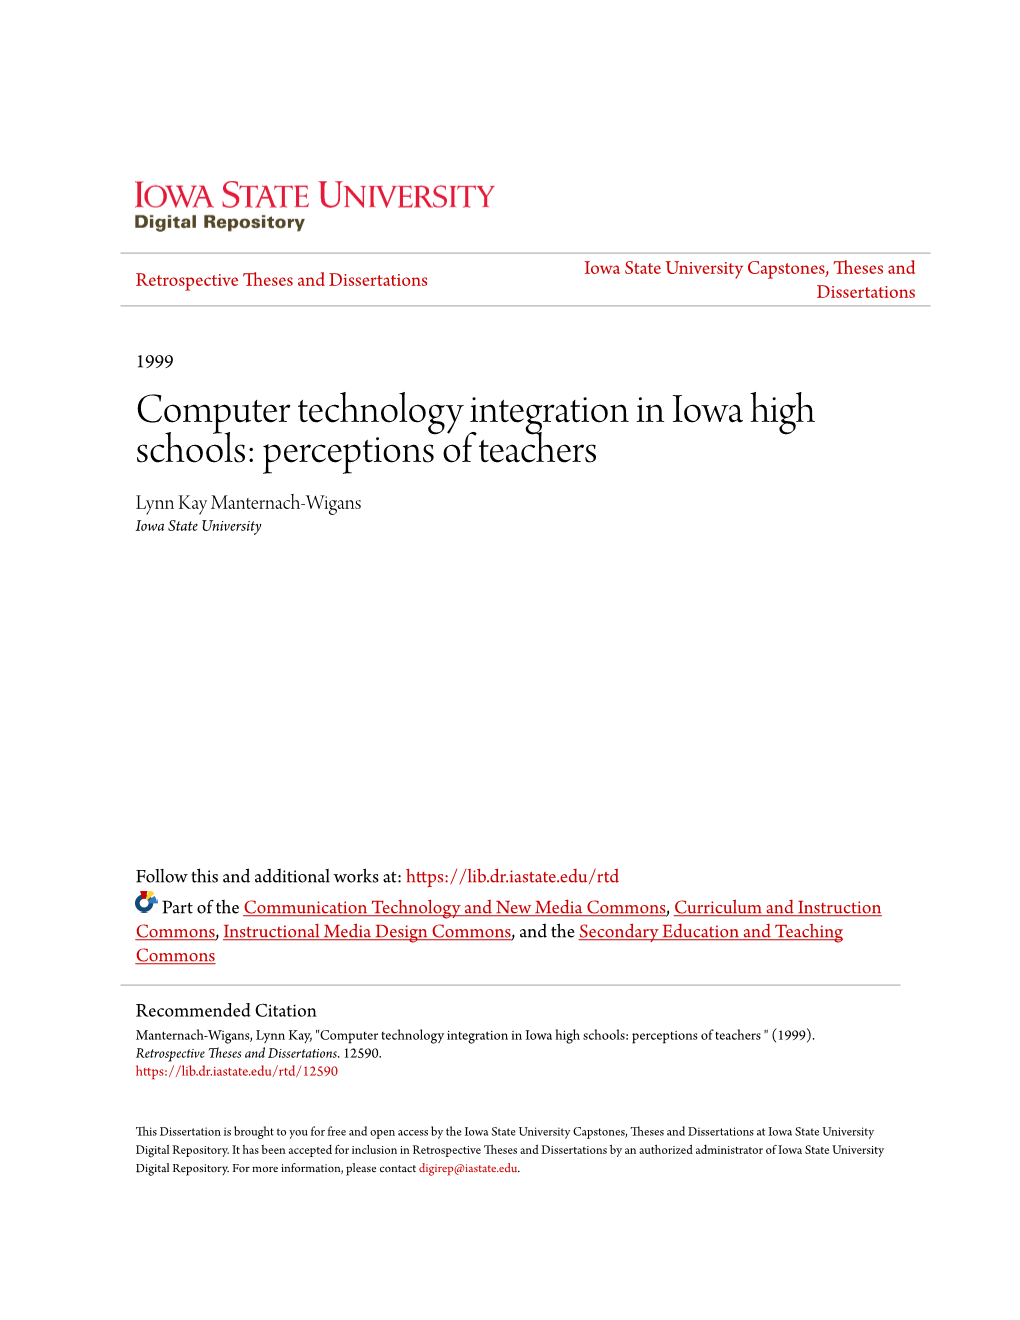 Computer Technology Integration in Iowa High Schools: Perceptions of Teachers Lynn Kay Manternach-Wigans Iowa State University